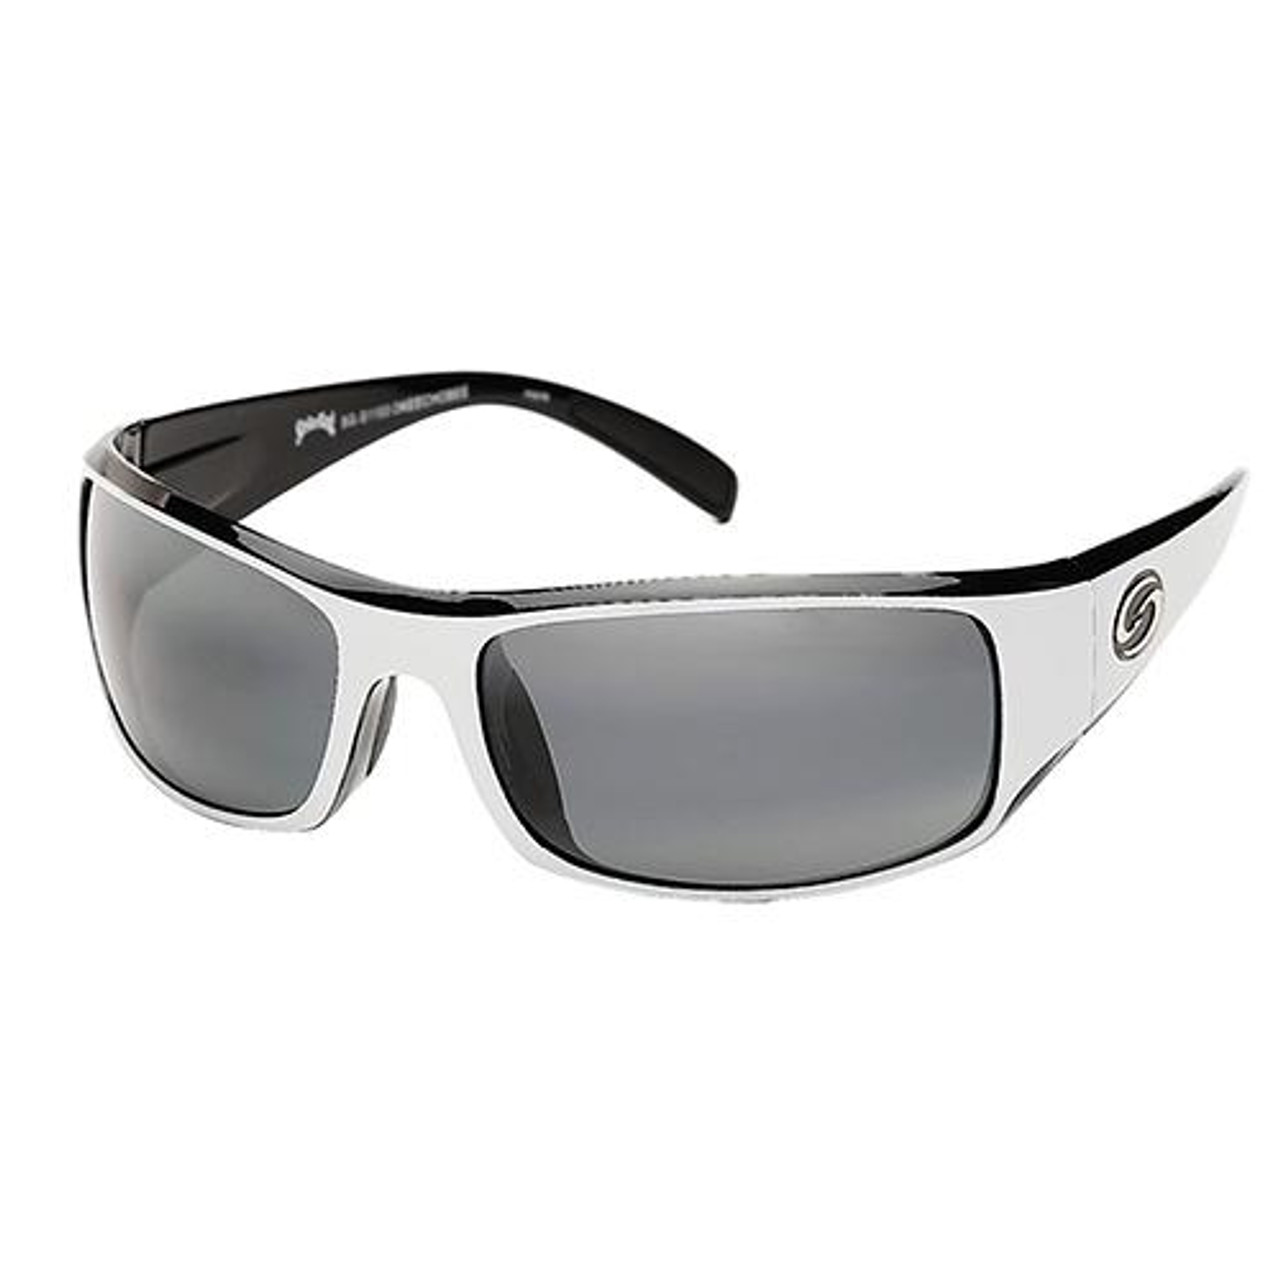 Strike King S11 Polarized Glasses - Black Gray Mirror